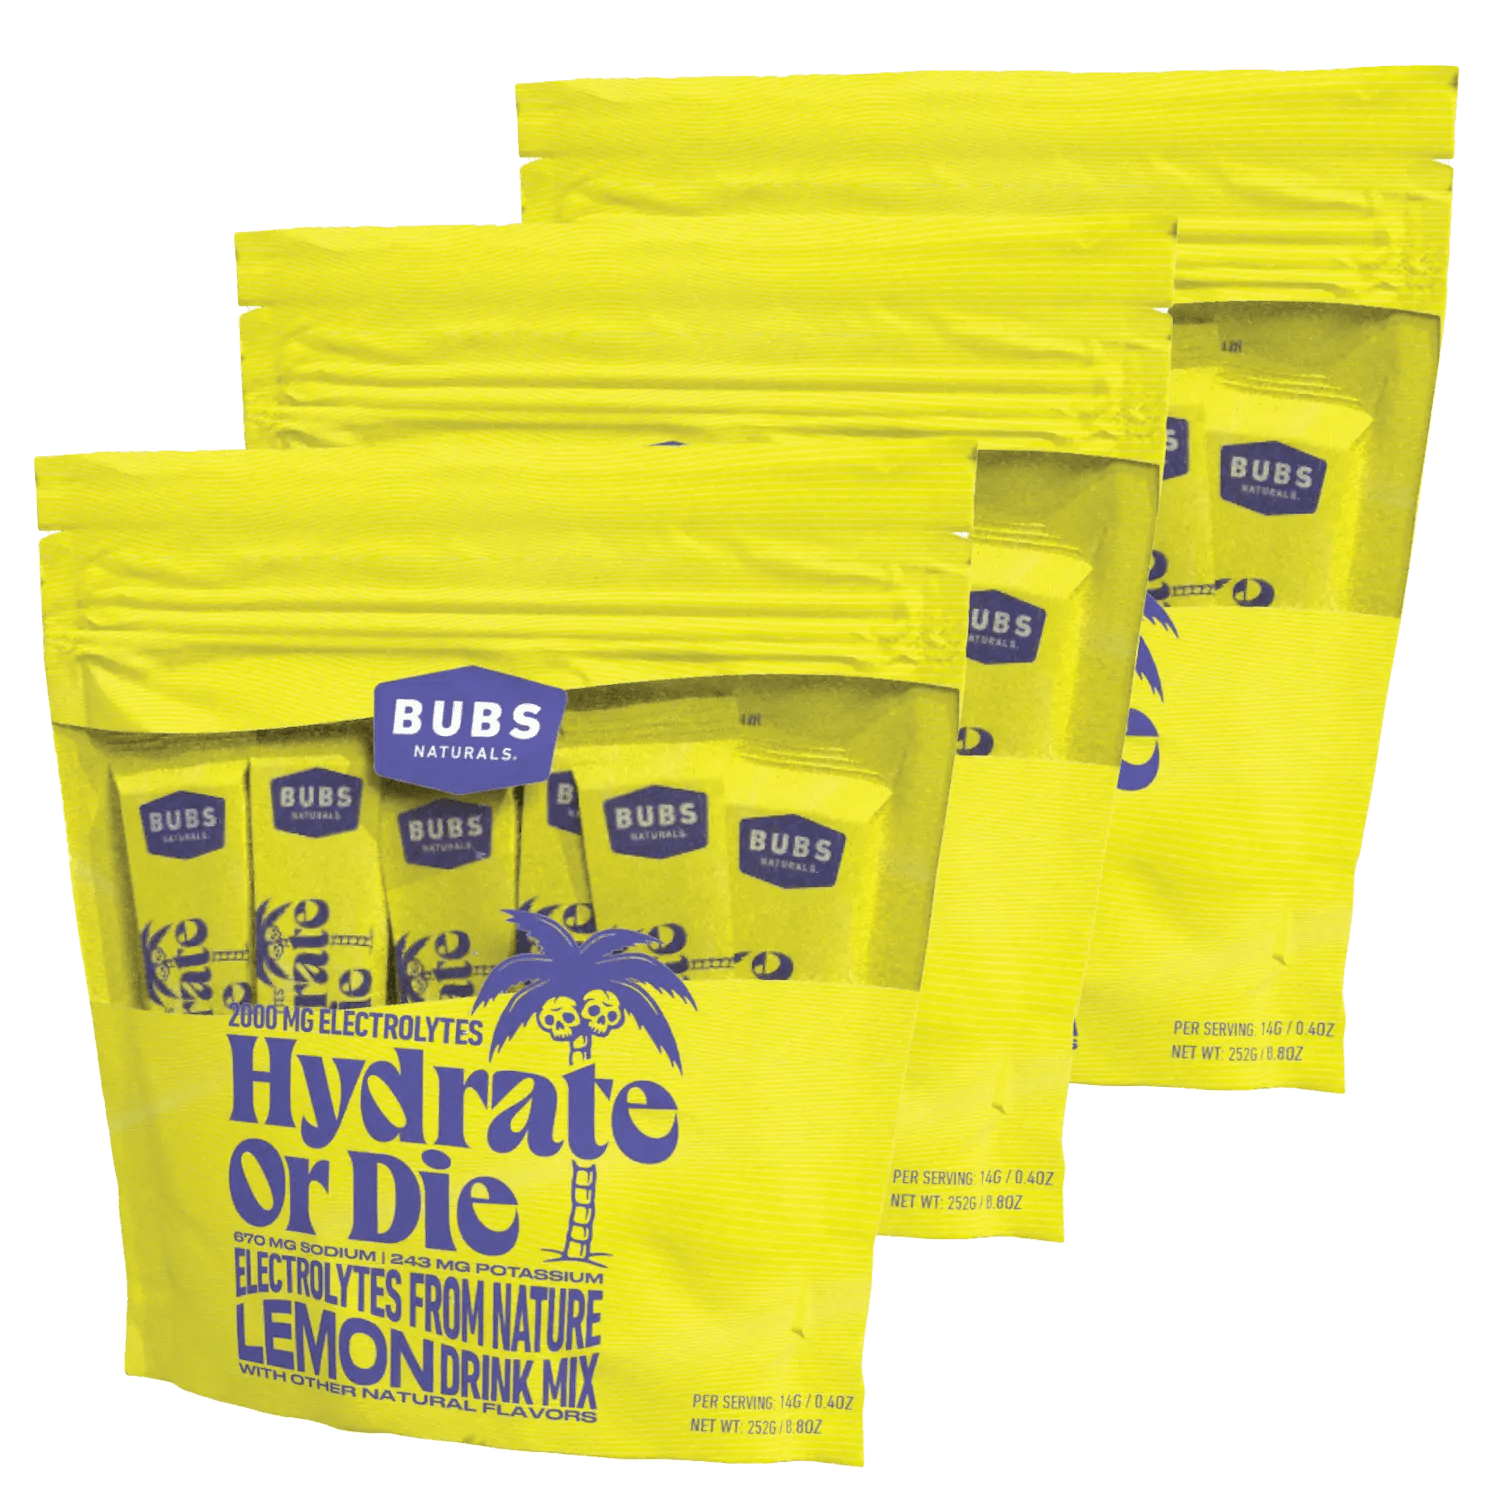 BUBS Naturals Hydrate or Die, 18 count bag, Natural Electrolytes, Lemon, bundle of 3